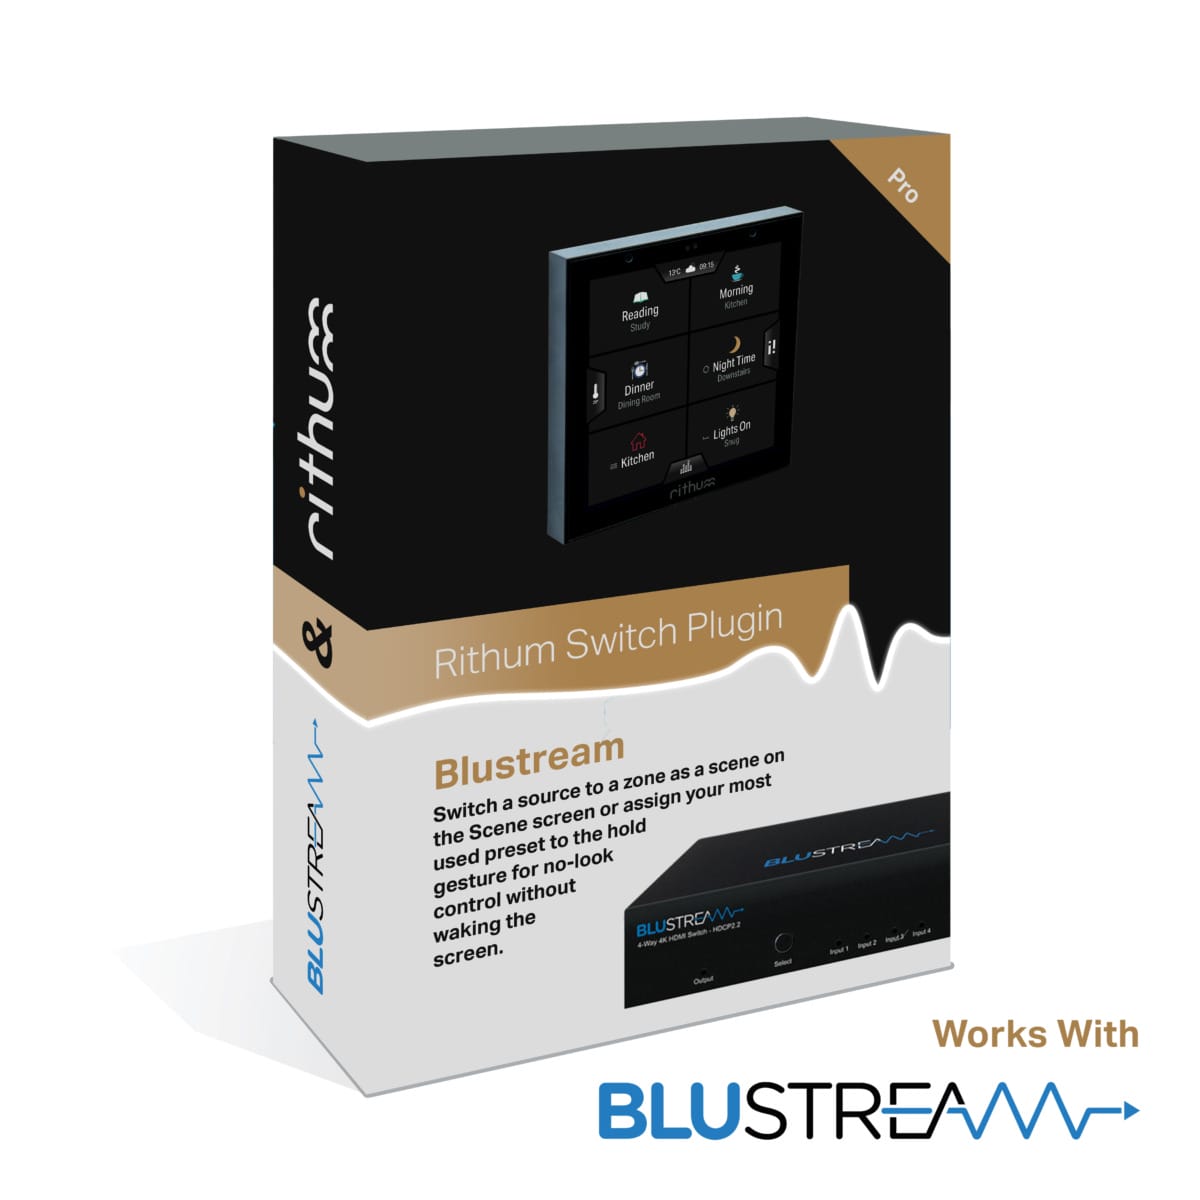 Rithum Switch Blustream plugin